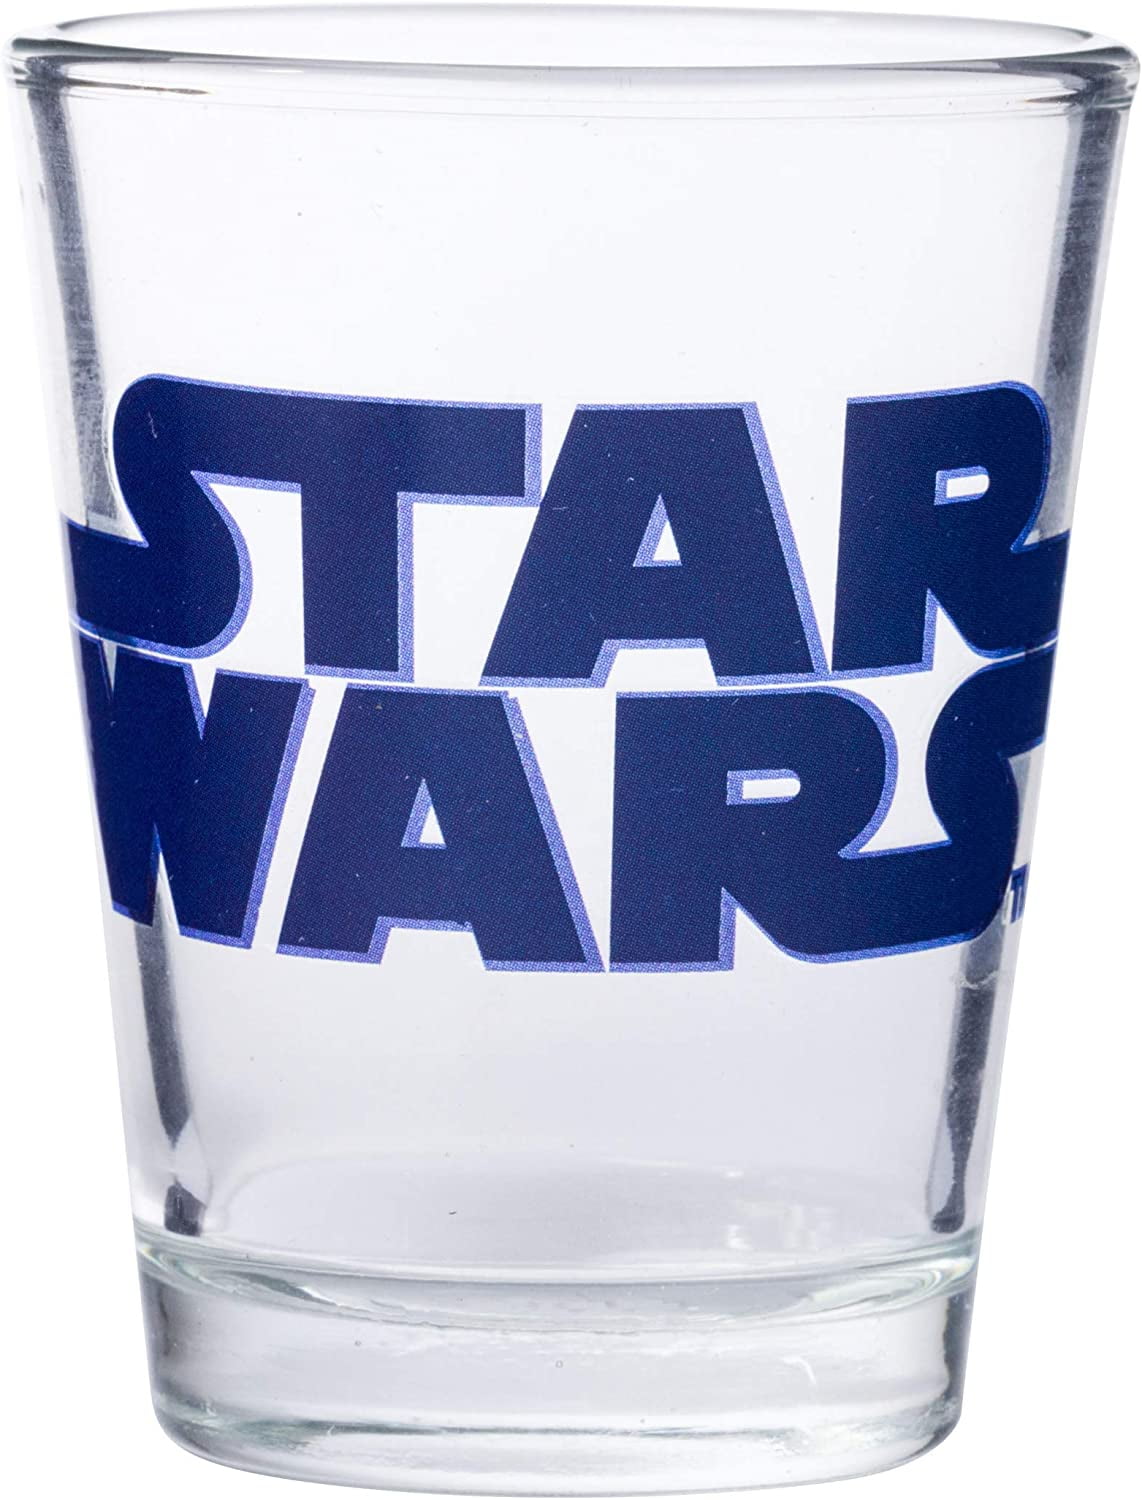 Star Wars Shot Glass 4-Pack